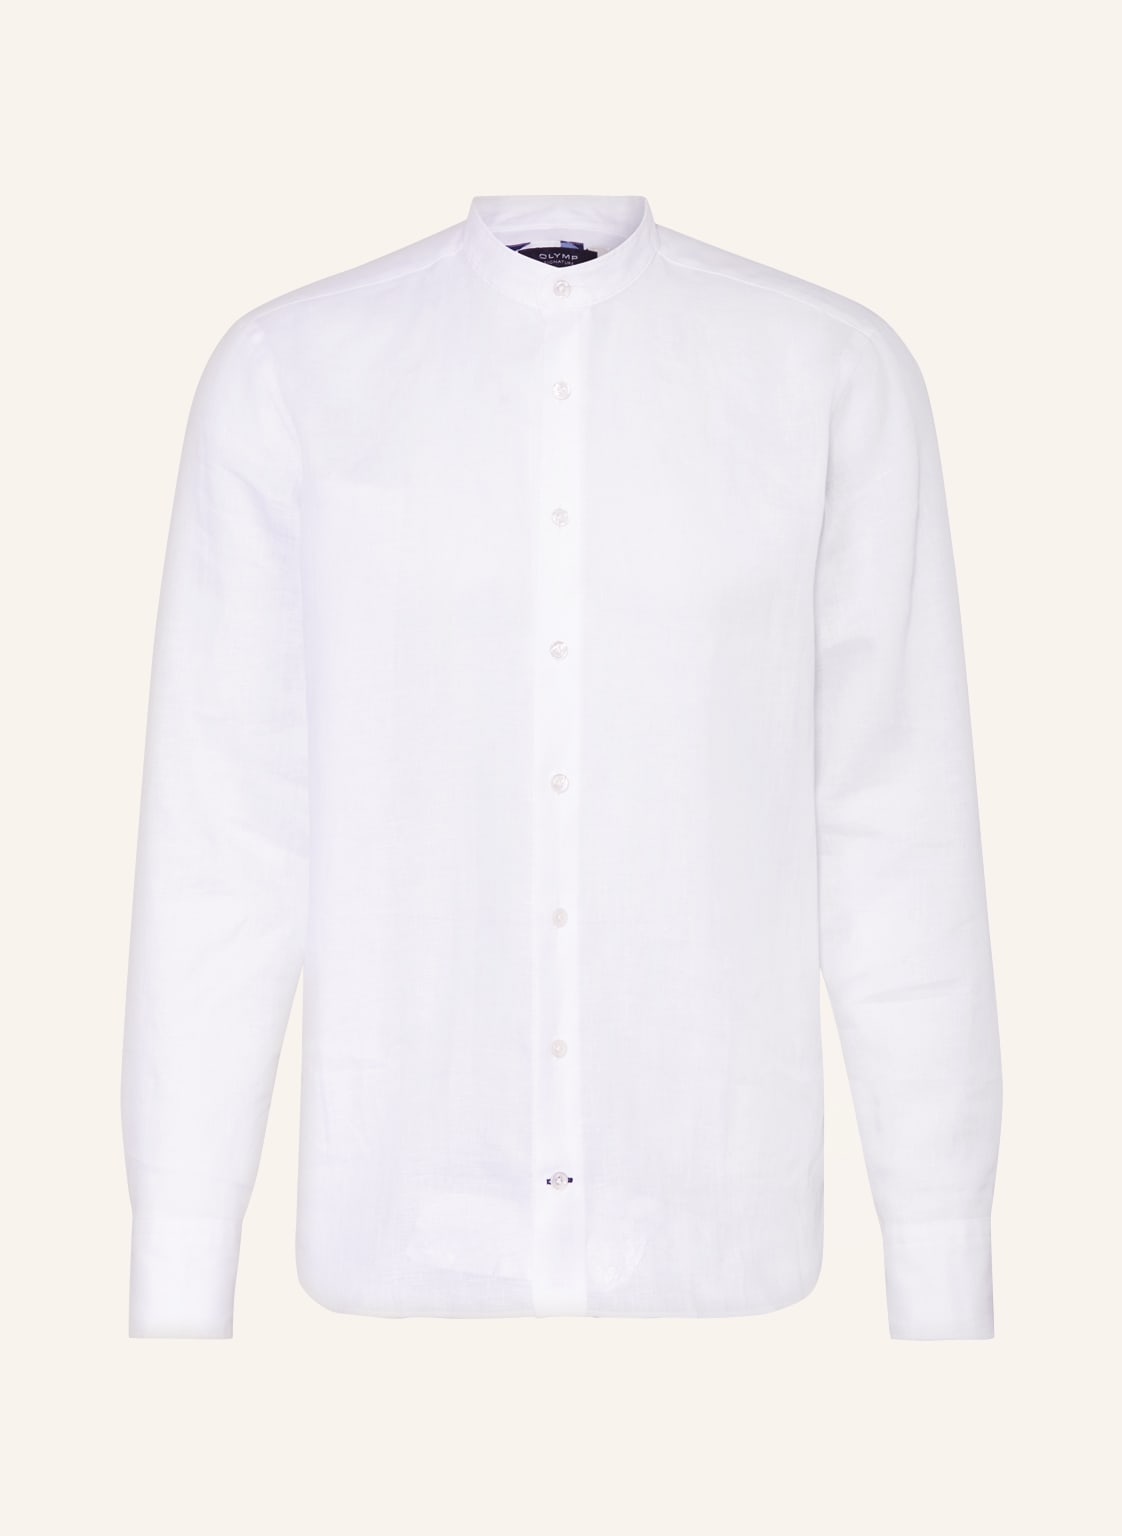 Image of Olymp Signature Leinenhemd Soft Business Tailored Fit Mit Stehkragen weiss